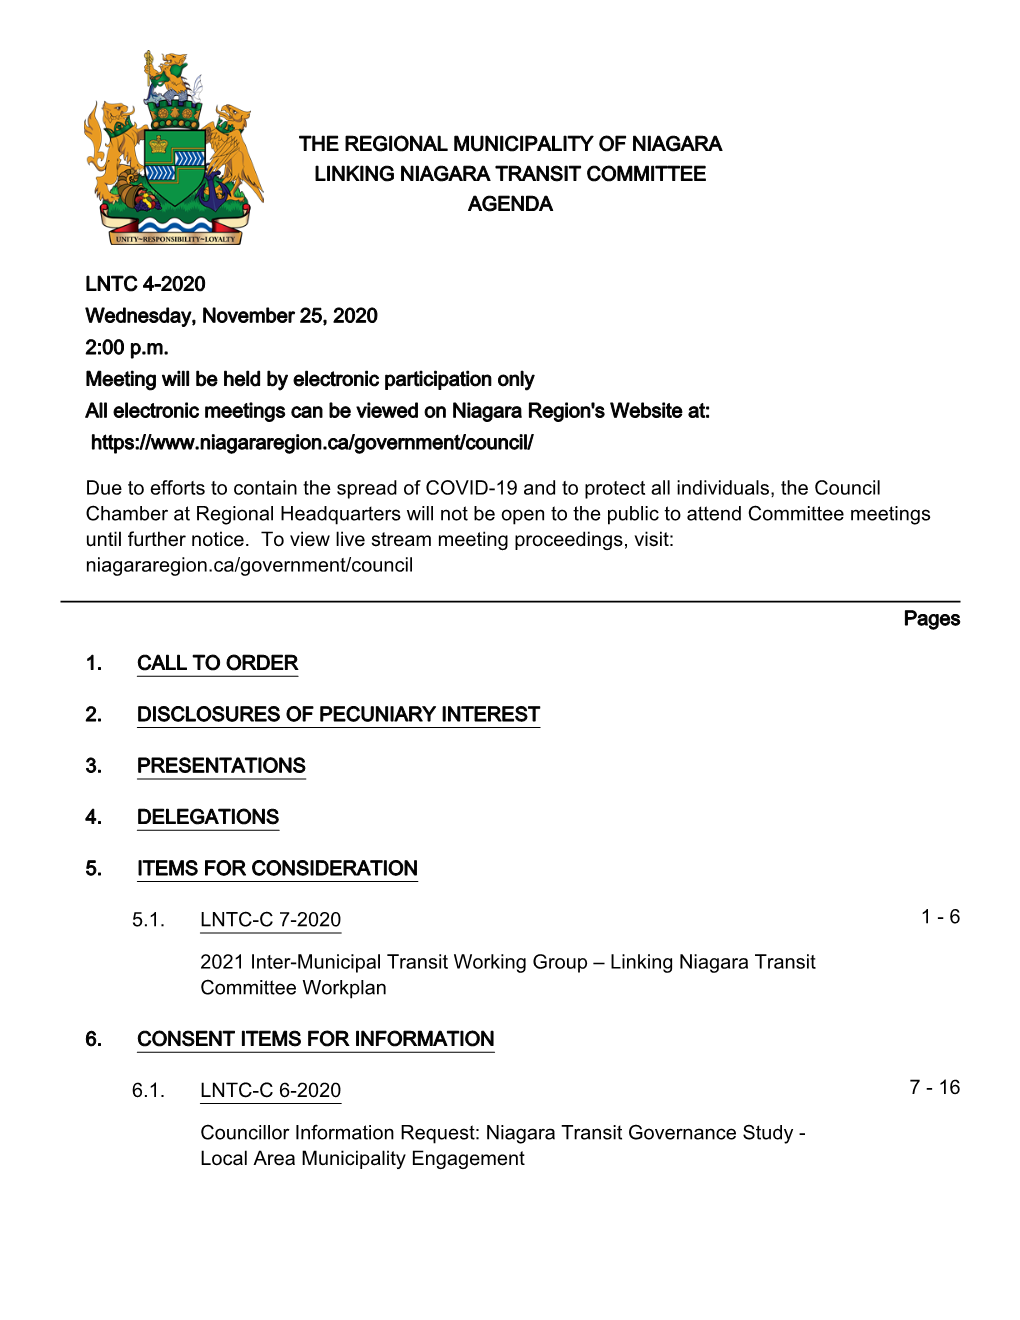 Linking Niagara Transit Committee Agenda Package